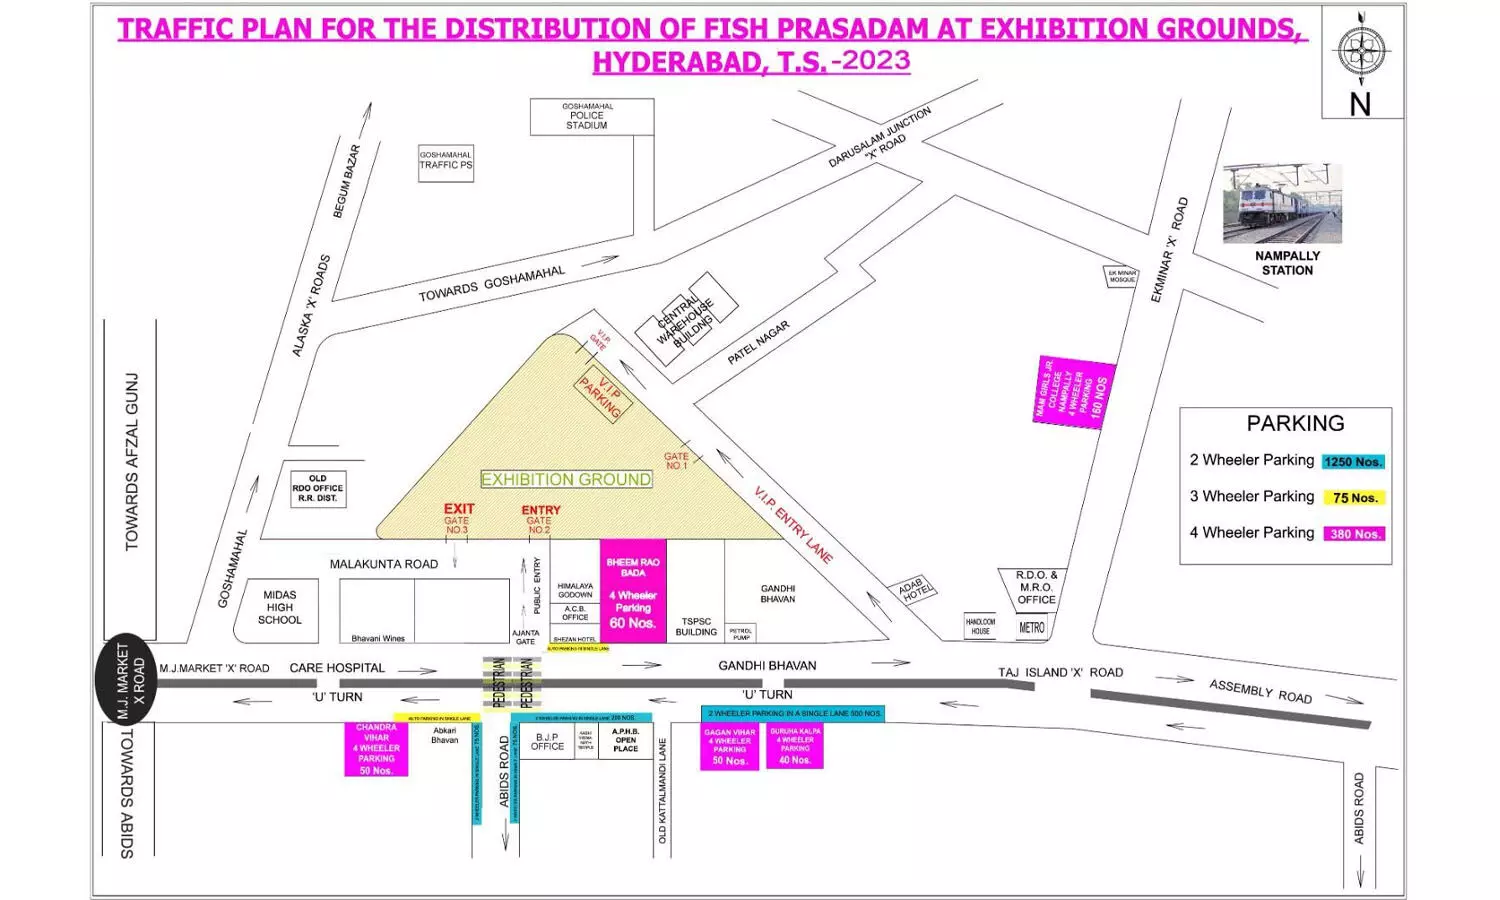 Traffic diversions in Hyderabad for annual fish prasadam distribution